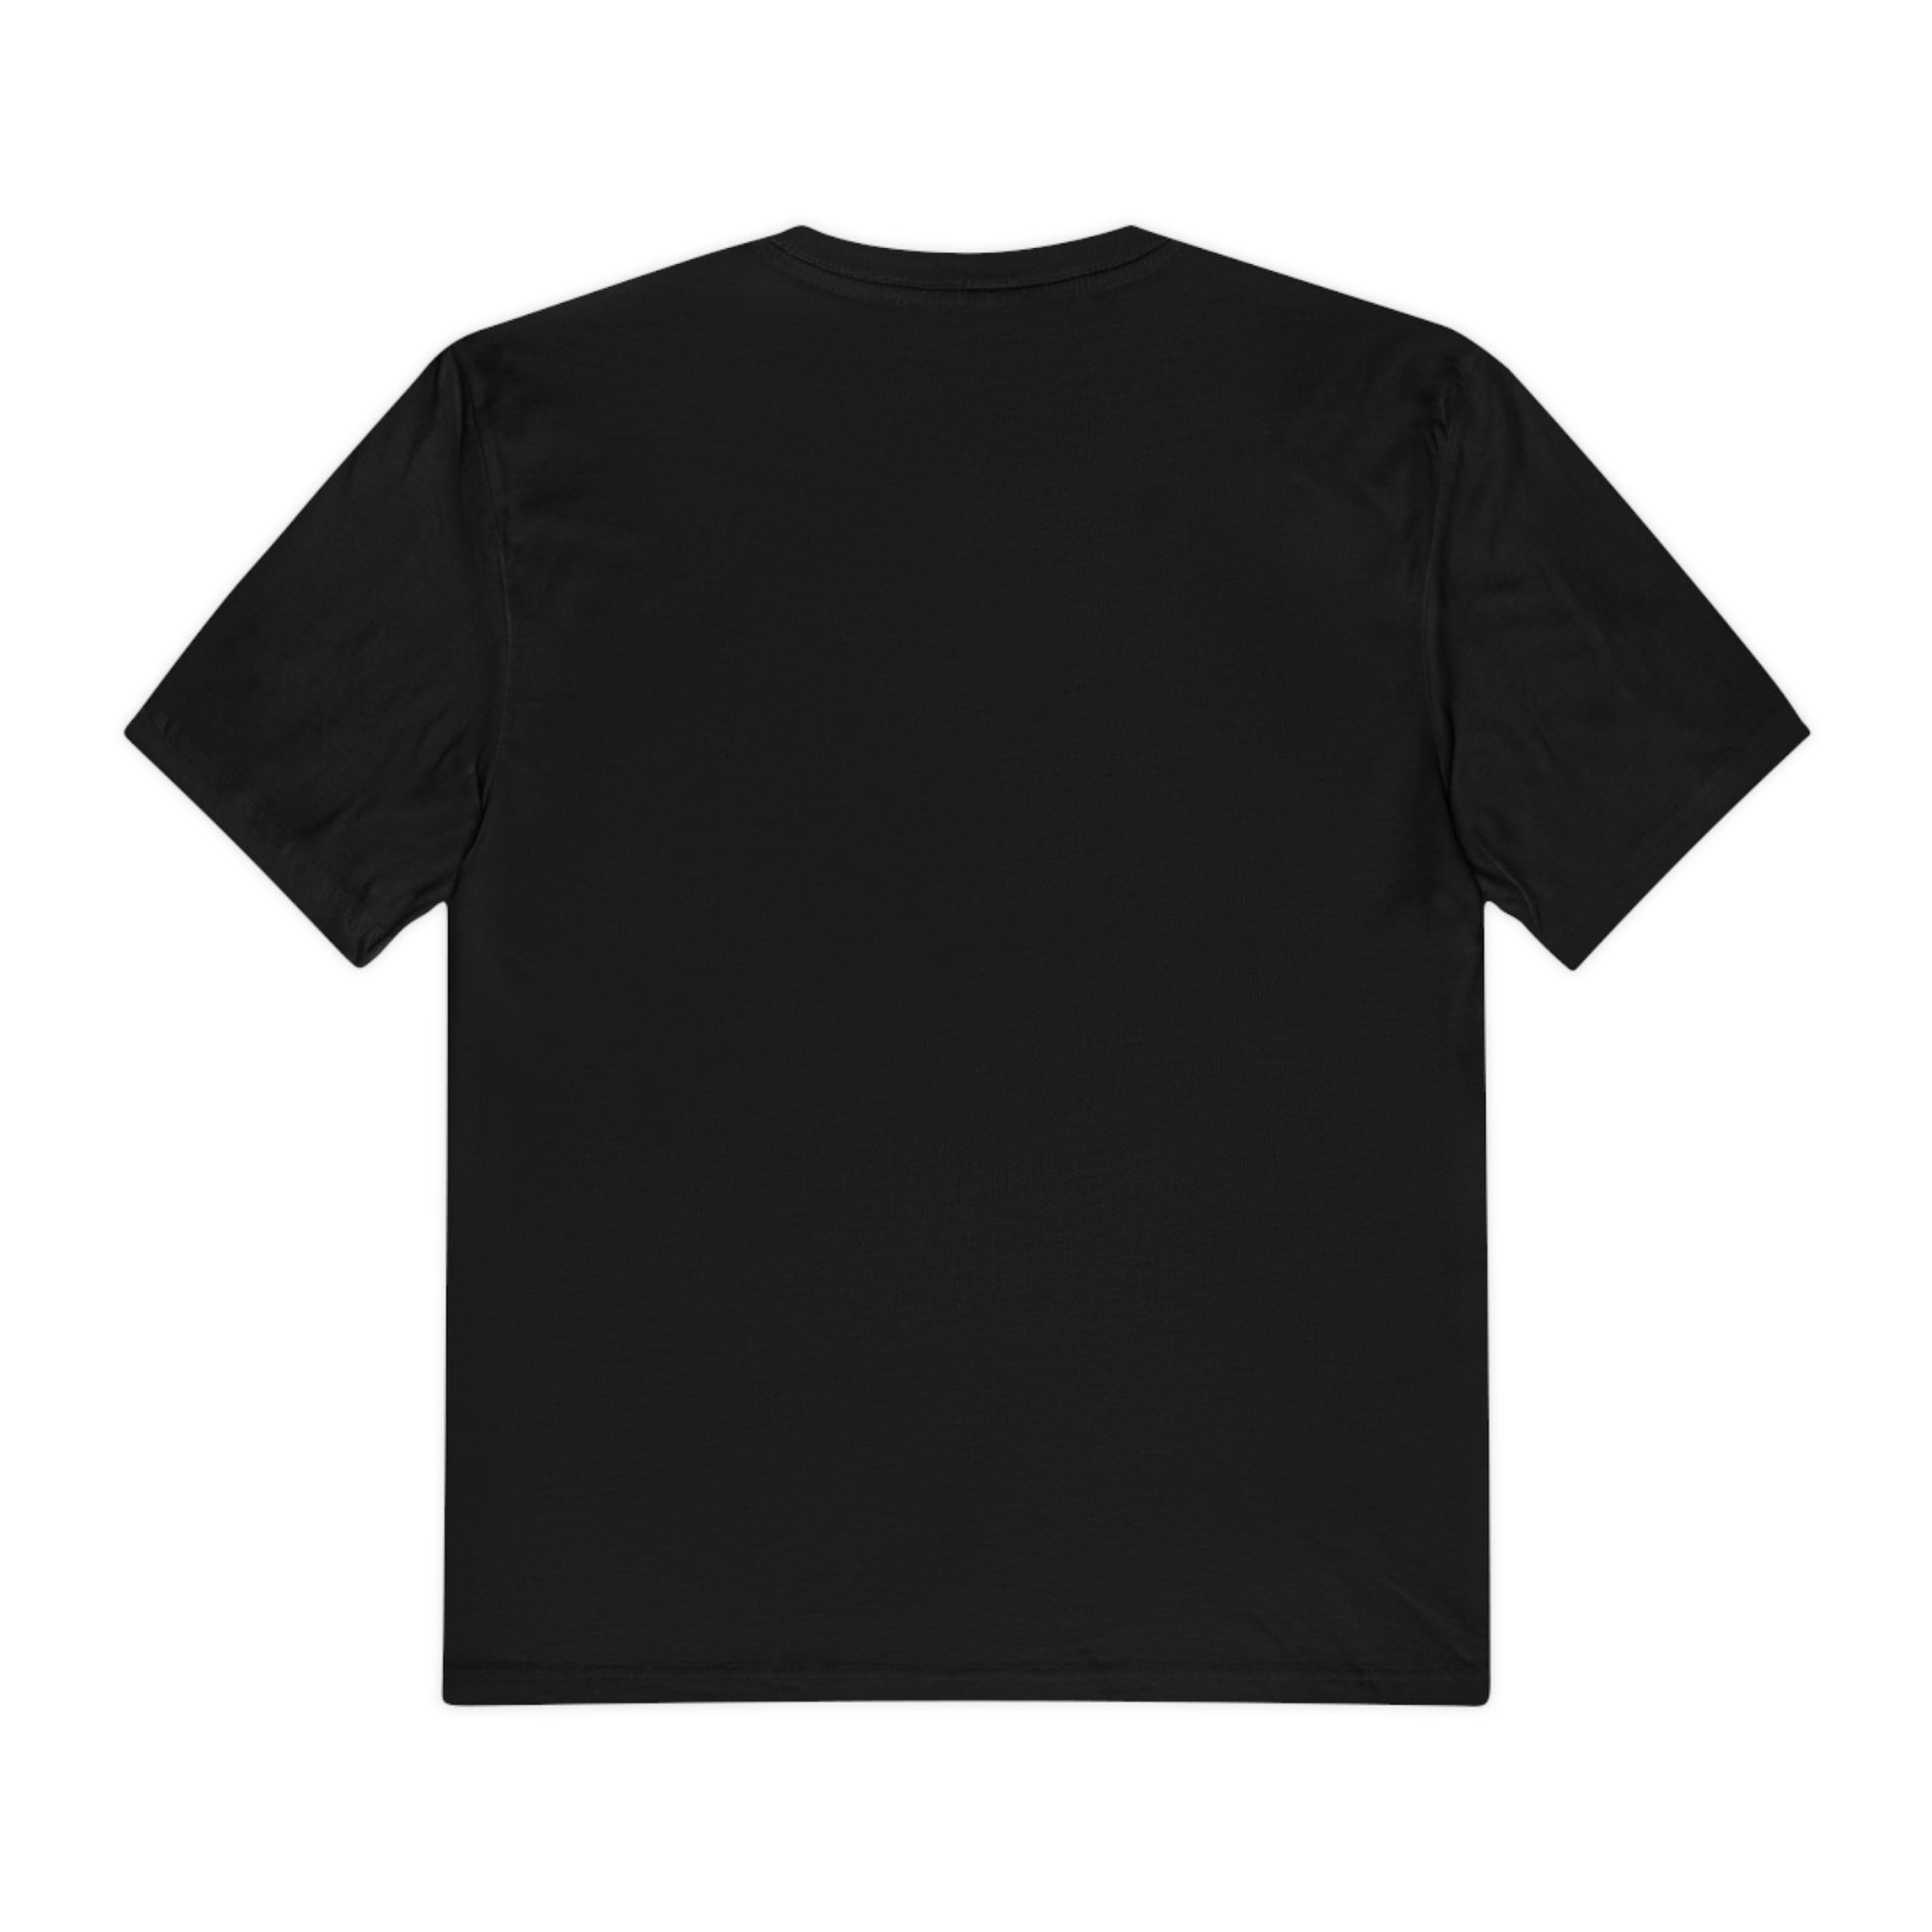 The down town law shirt | Urban style shirt | Streetwear shirt | Illustrate shirt | Unisex shirt | Modern style shirt -  L2KBoutique